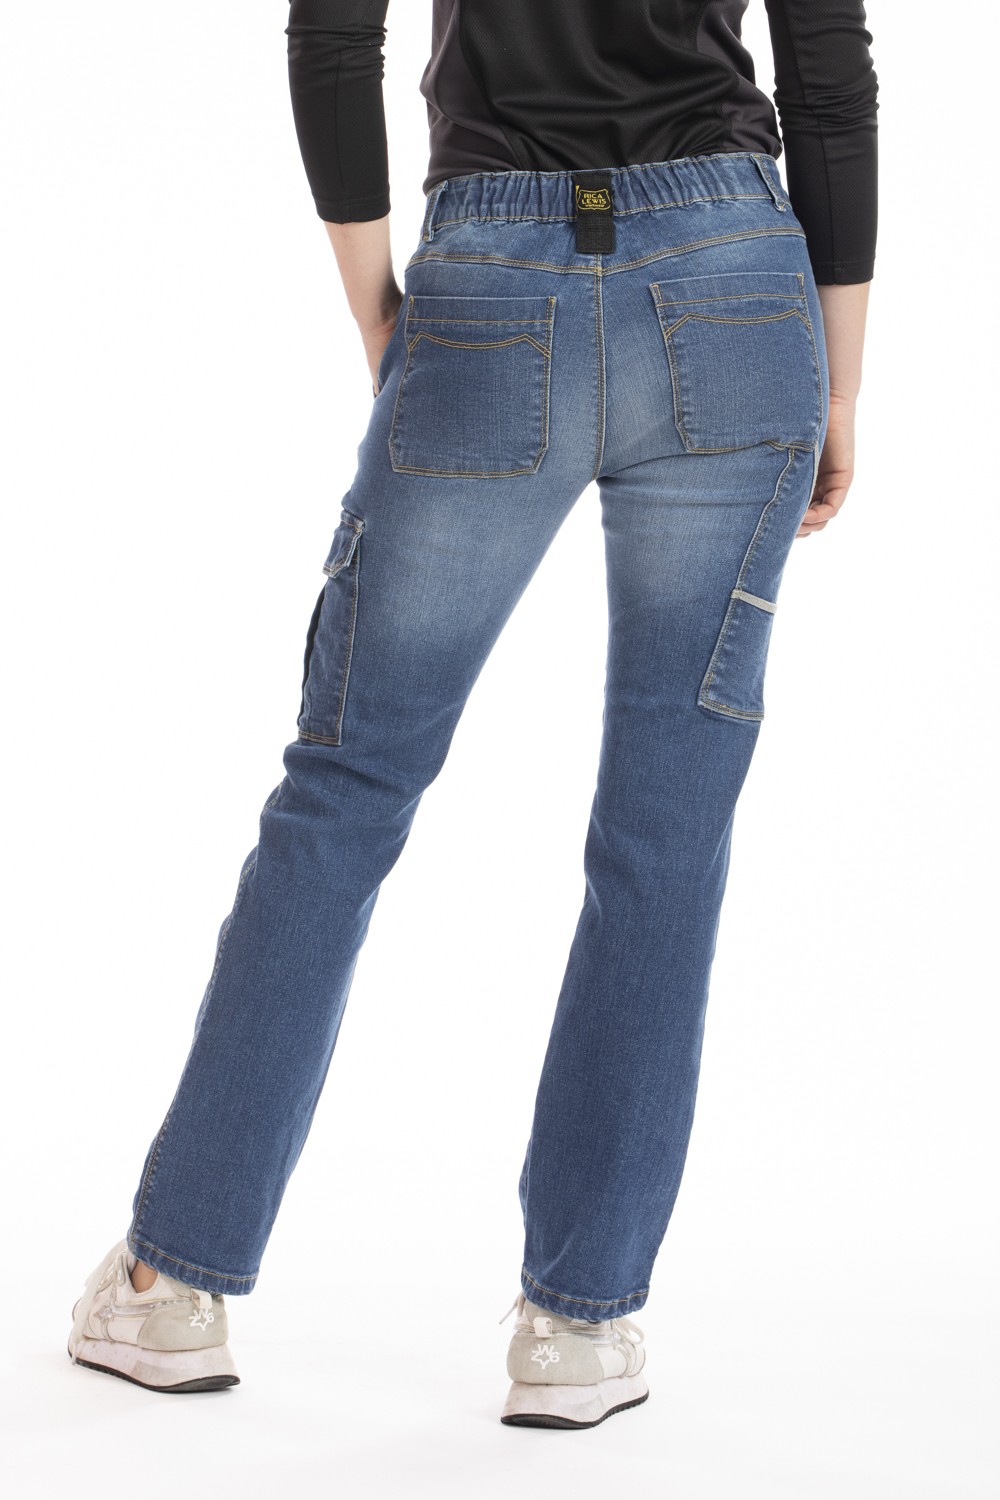 Jeans travail femme confort stretch Betty Rica lewis bleu